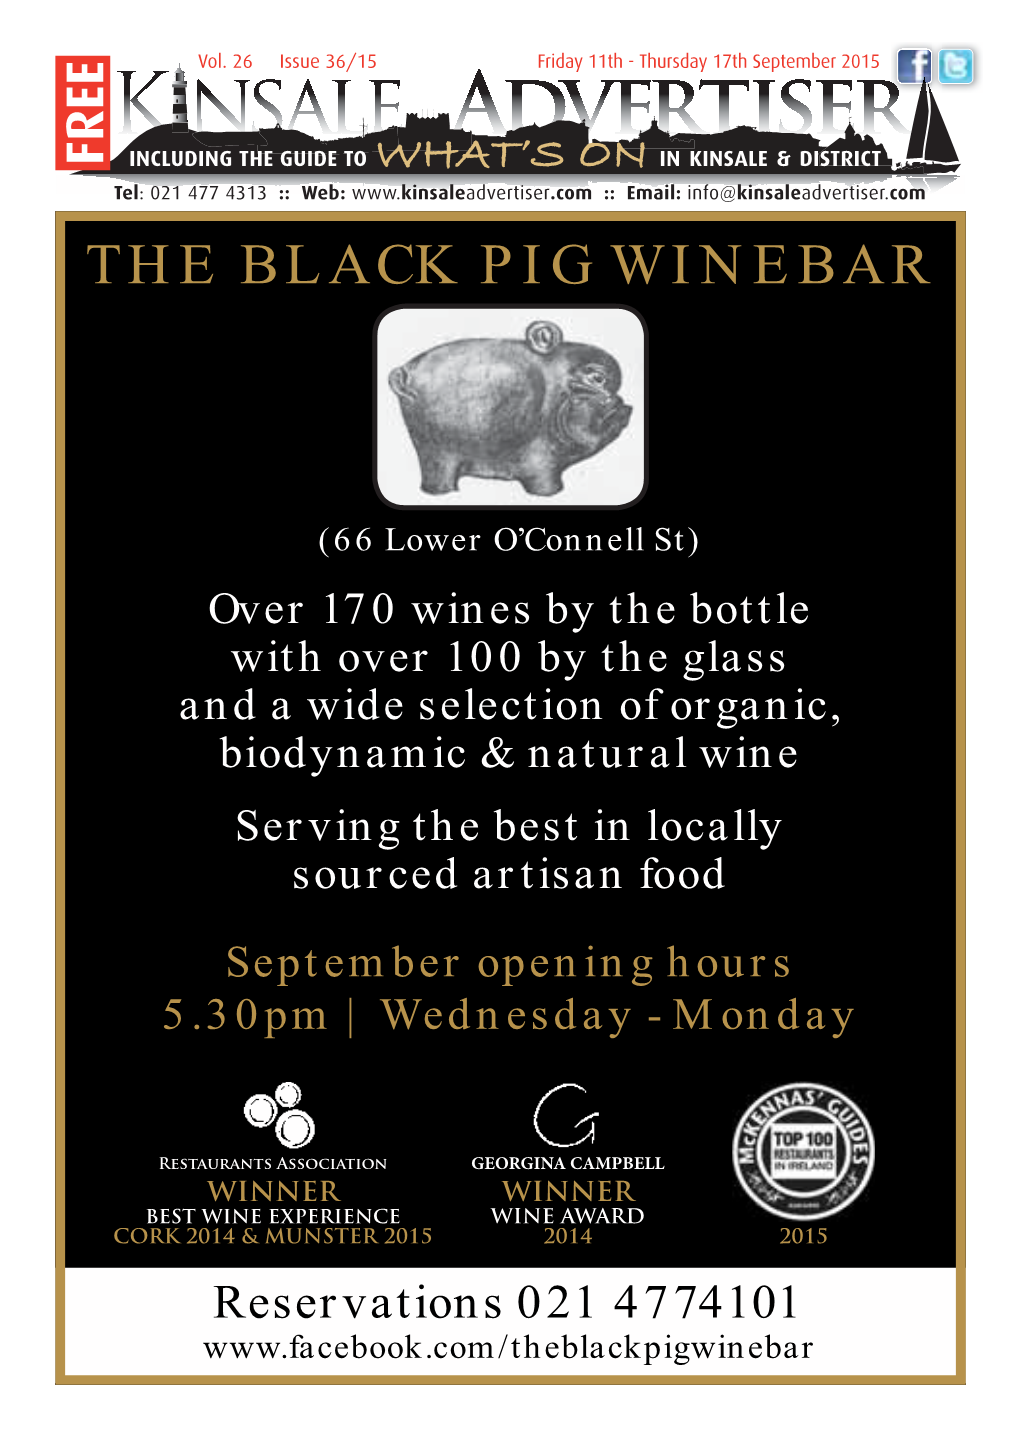 The Black Pig Winebar